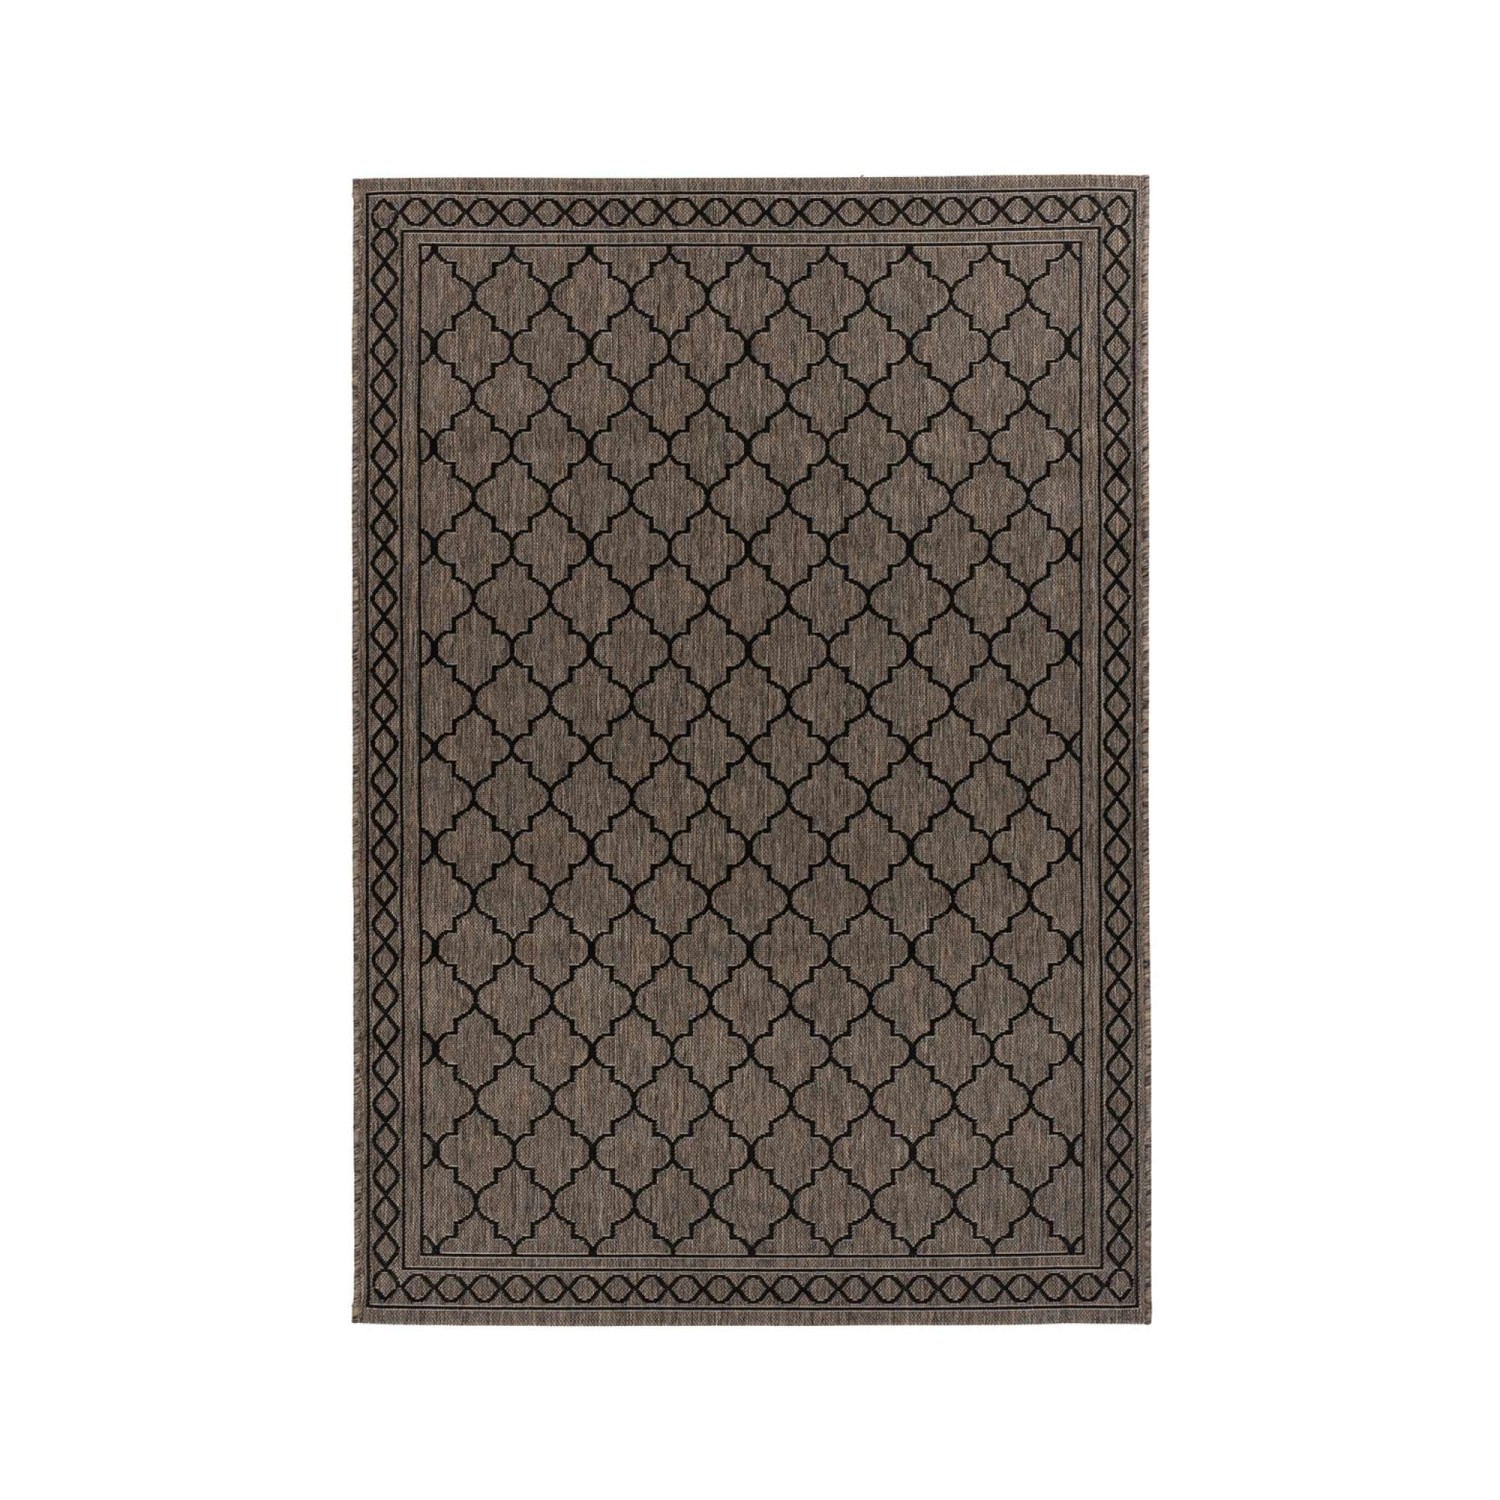 MeGusta Flachflor Teppich Modern Grau - Braun Polypropylen 80x150 cm Paula günstig online kaufen